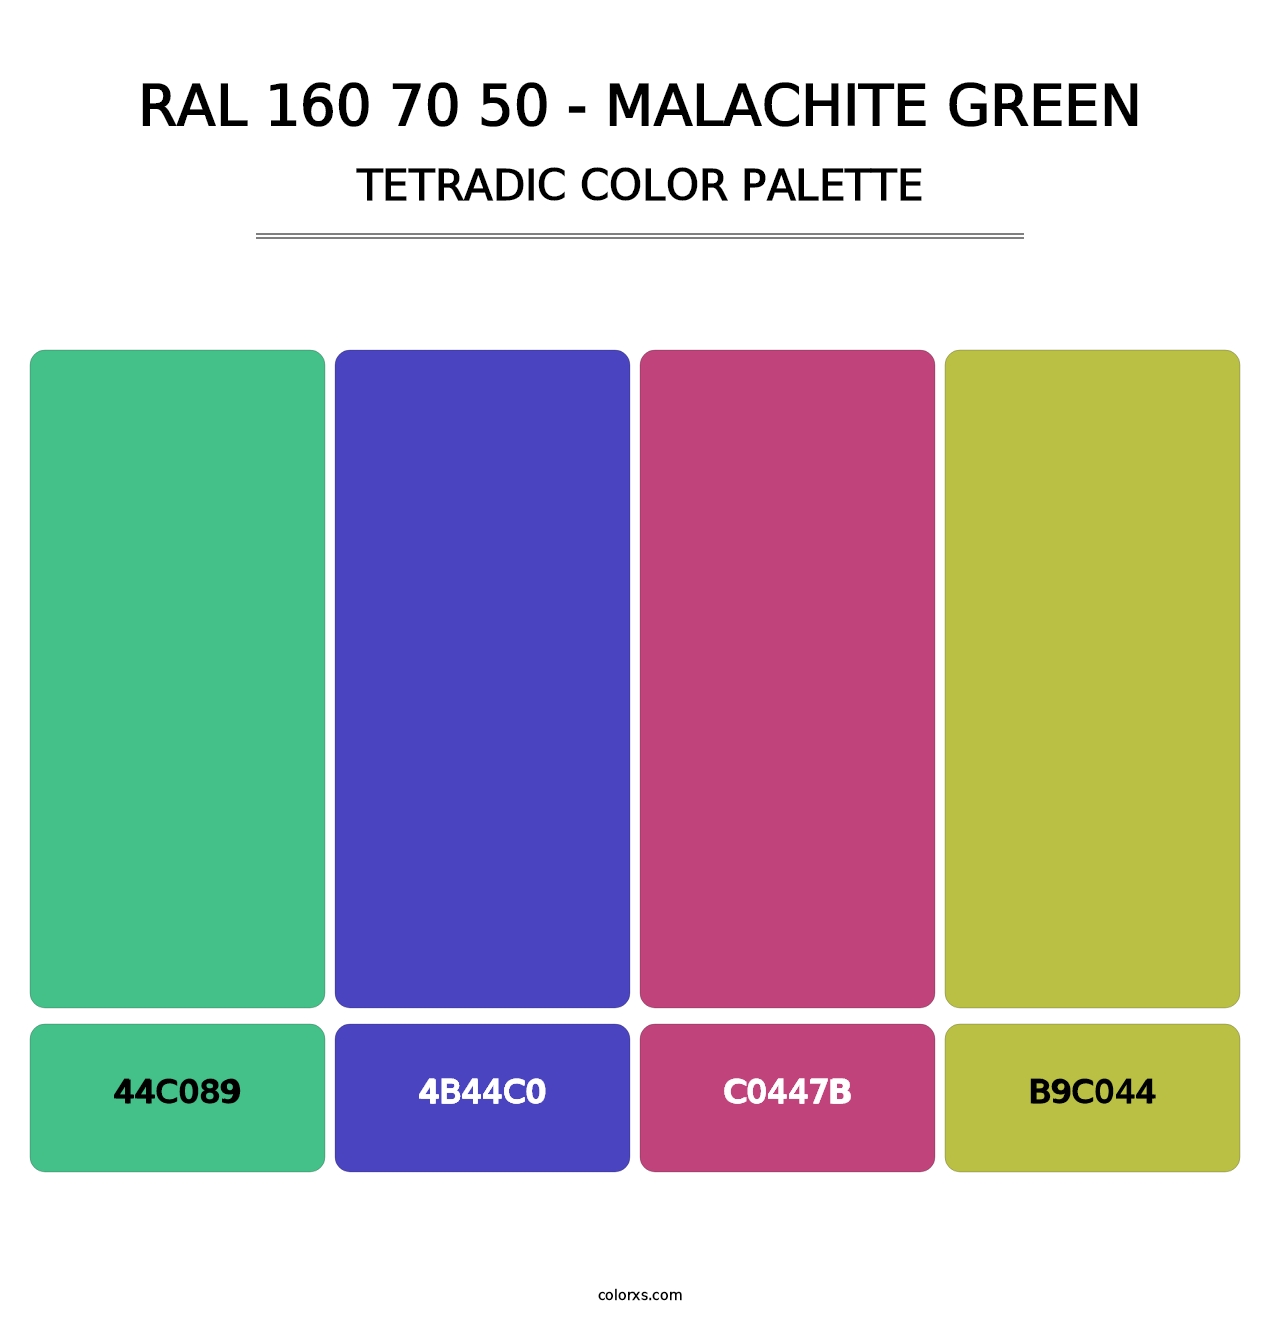 RAL 160 70 50 - Malachite Green - Tetradic Color Palette